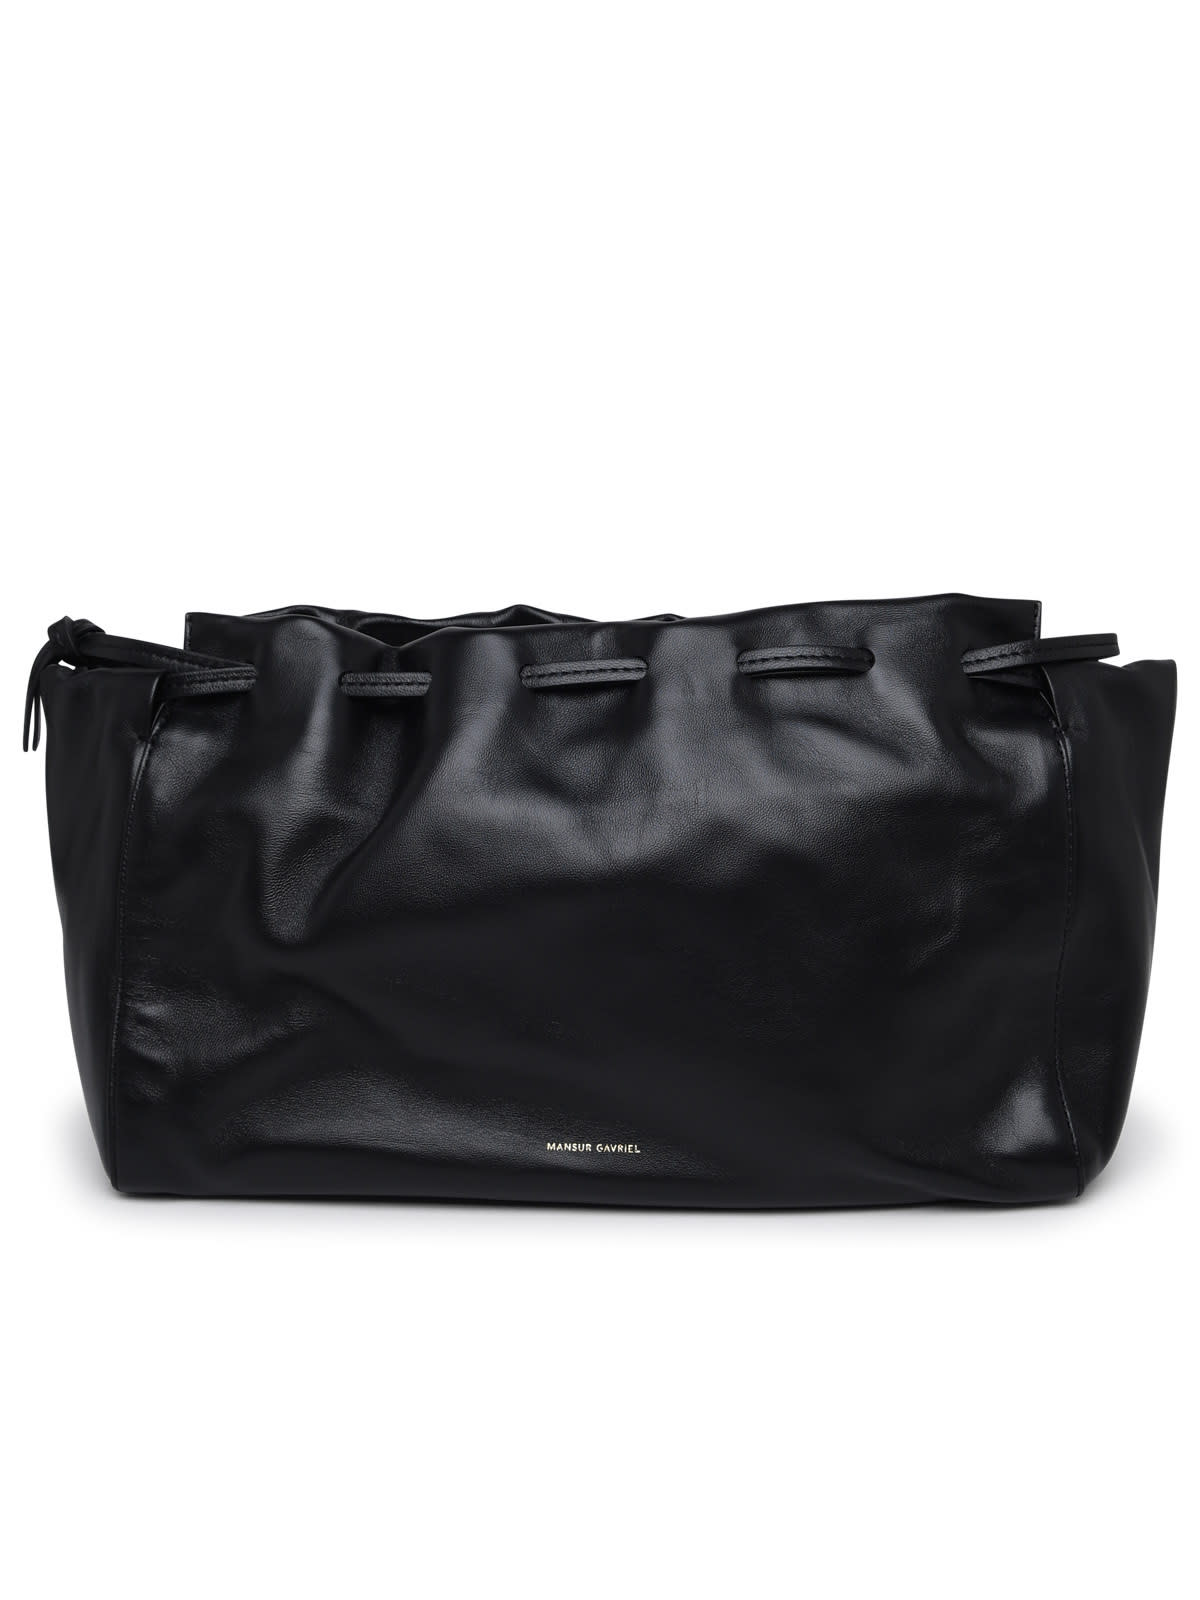 bloom Black Leather Crossbody Bag